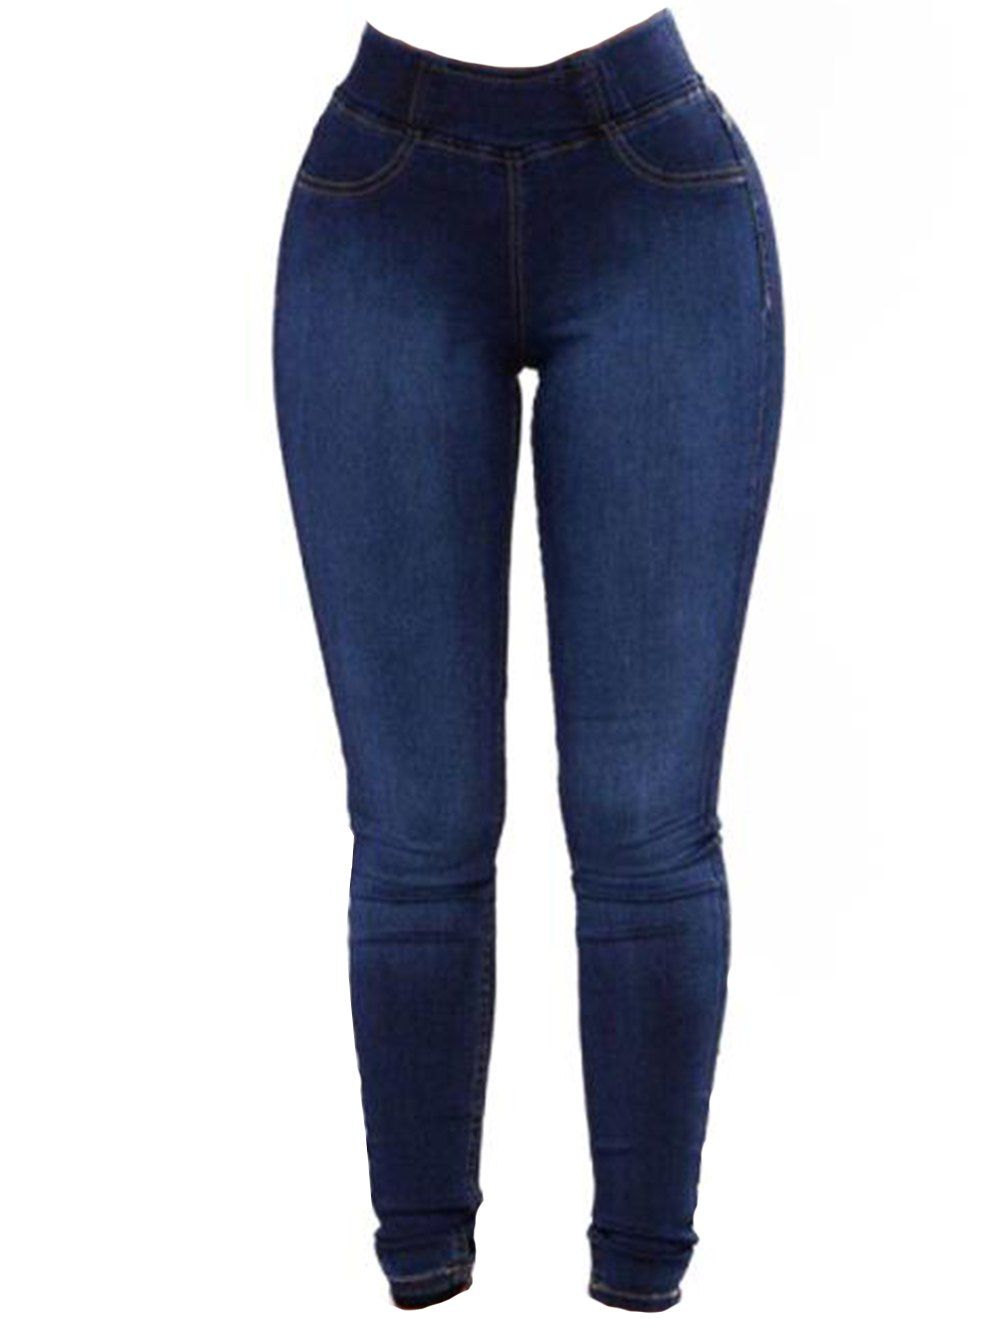 Buy Womens Fashion Slim Fit Stretchy Skinny Jeans  